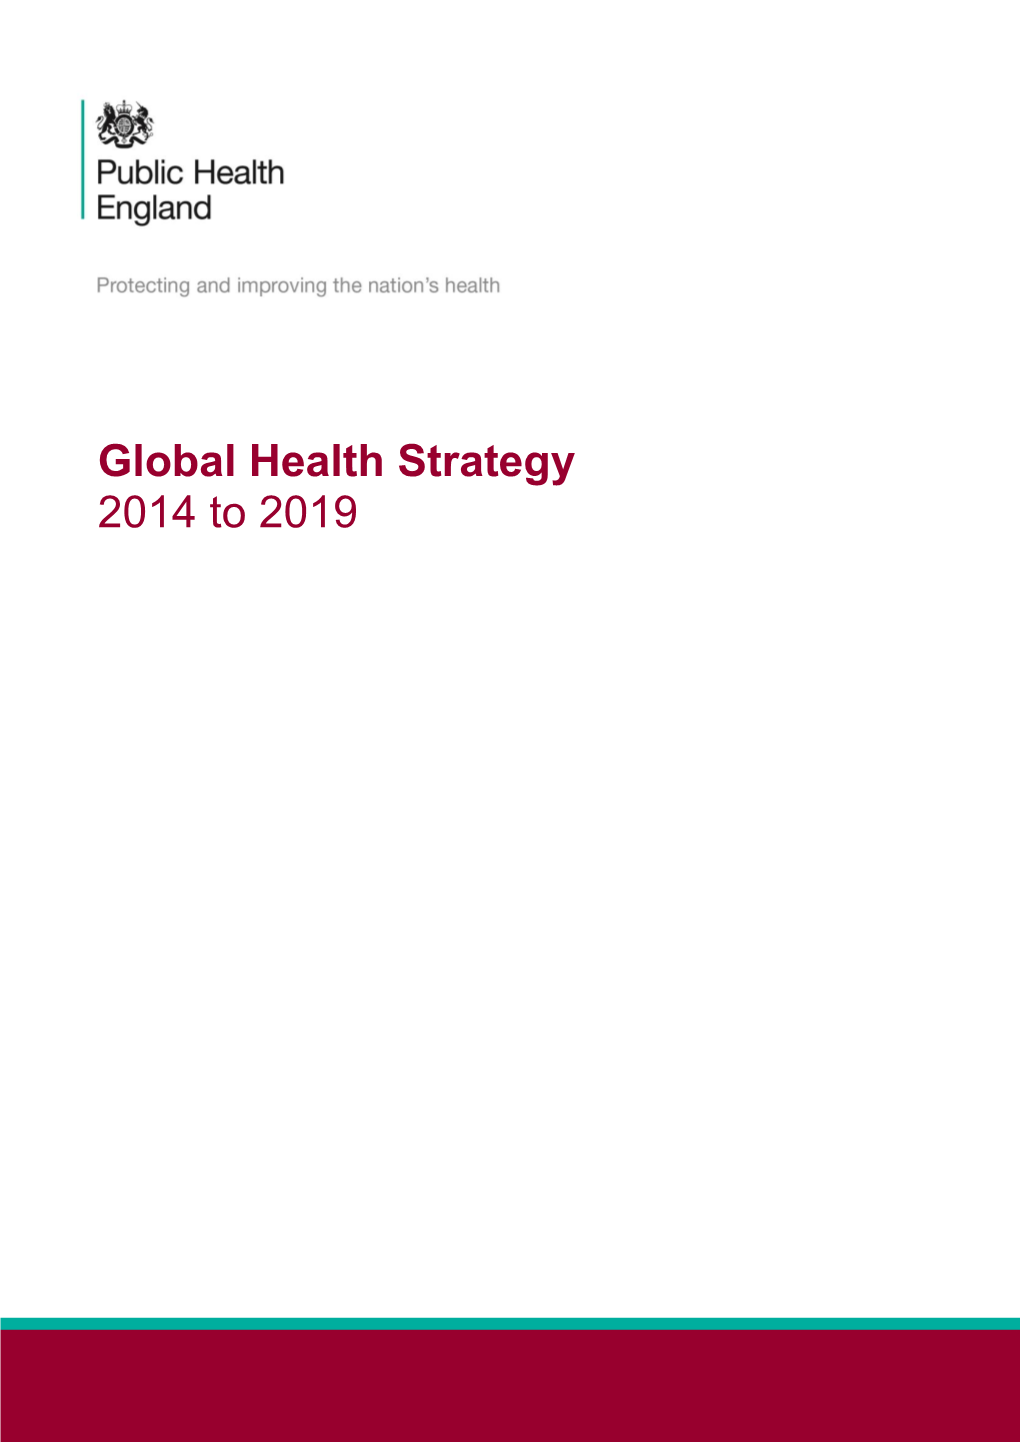 Global Health Strategy 2014 to 2019